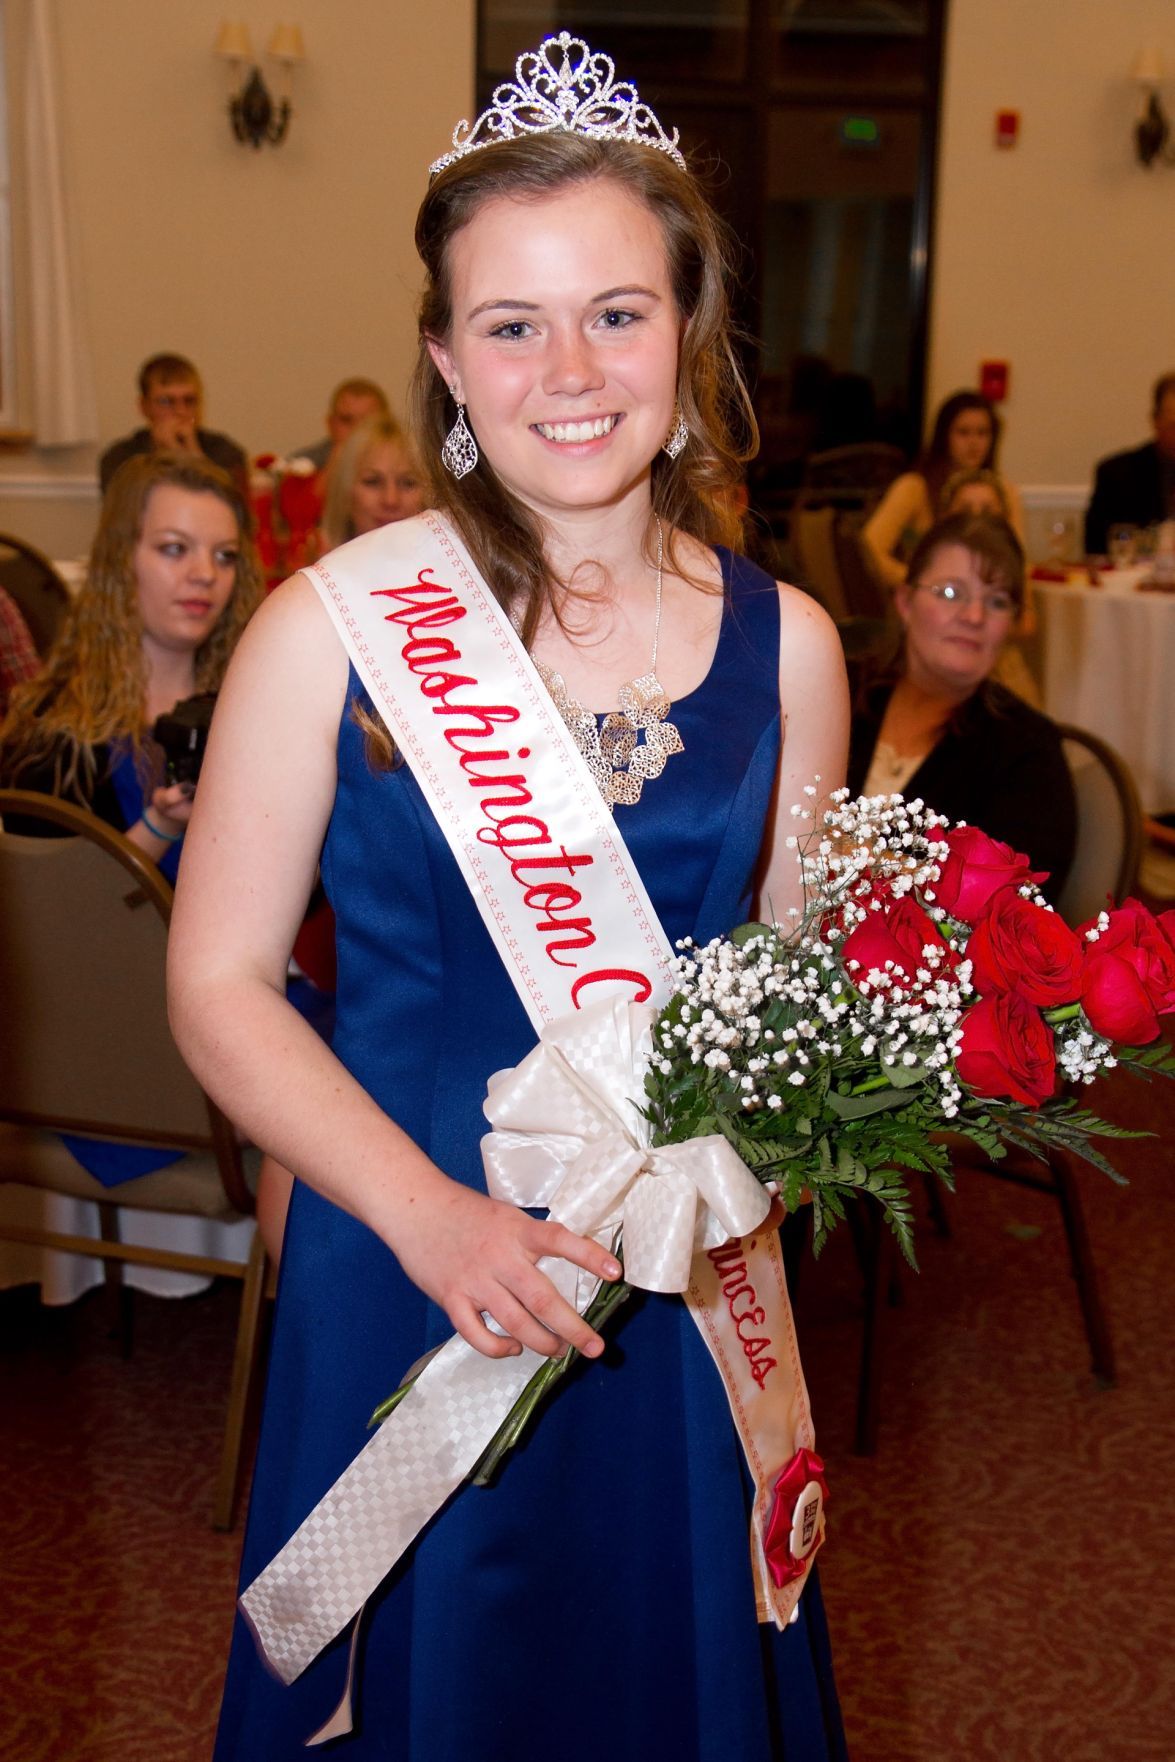 Salem teen named Washington County Dairy Princess | Local | poststar.com